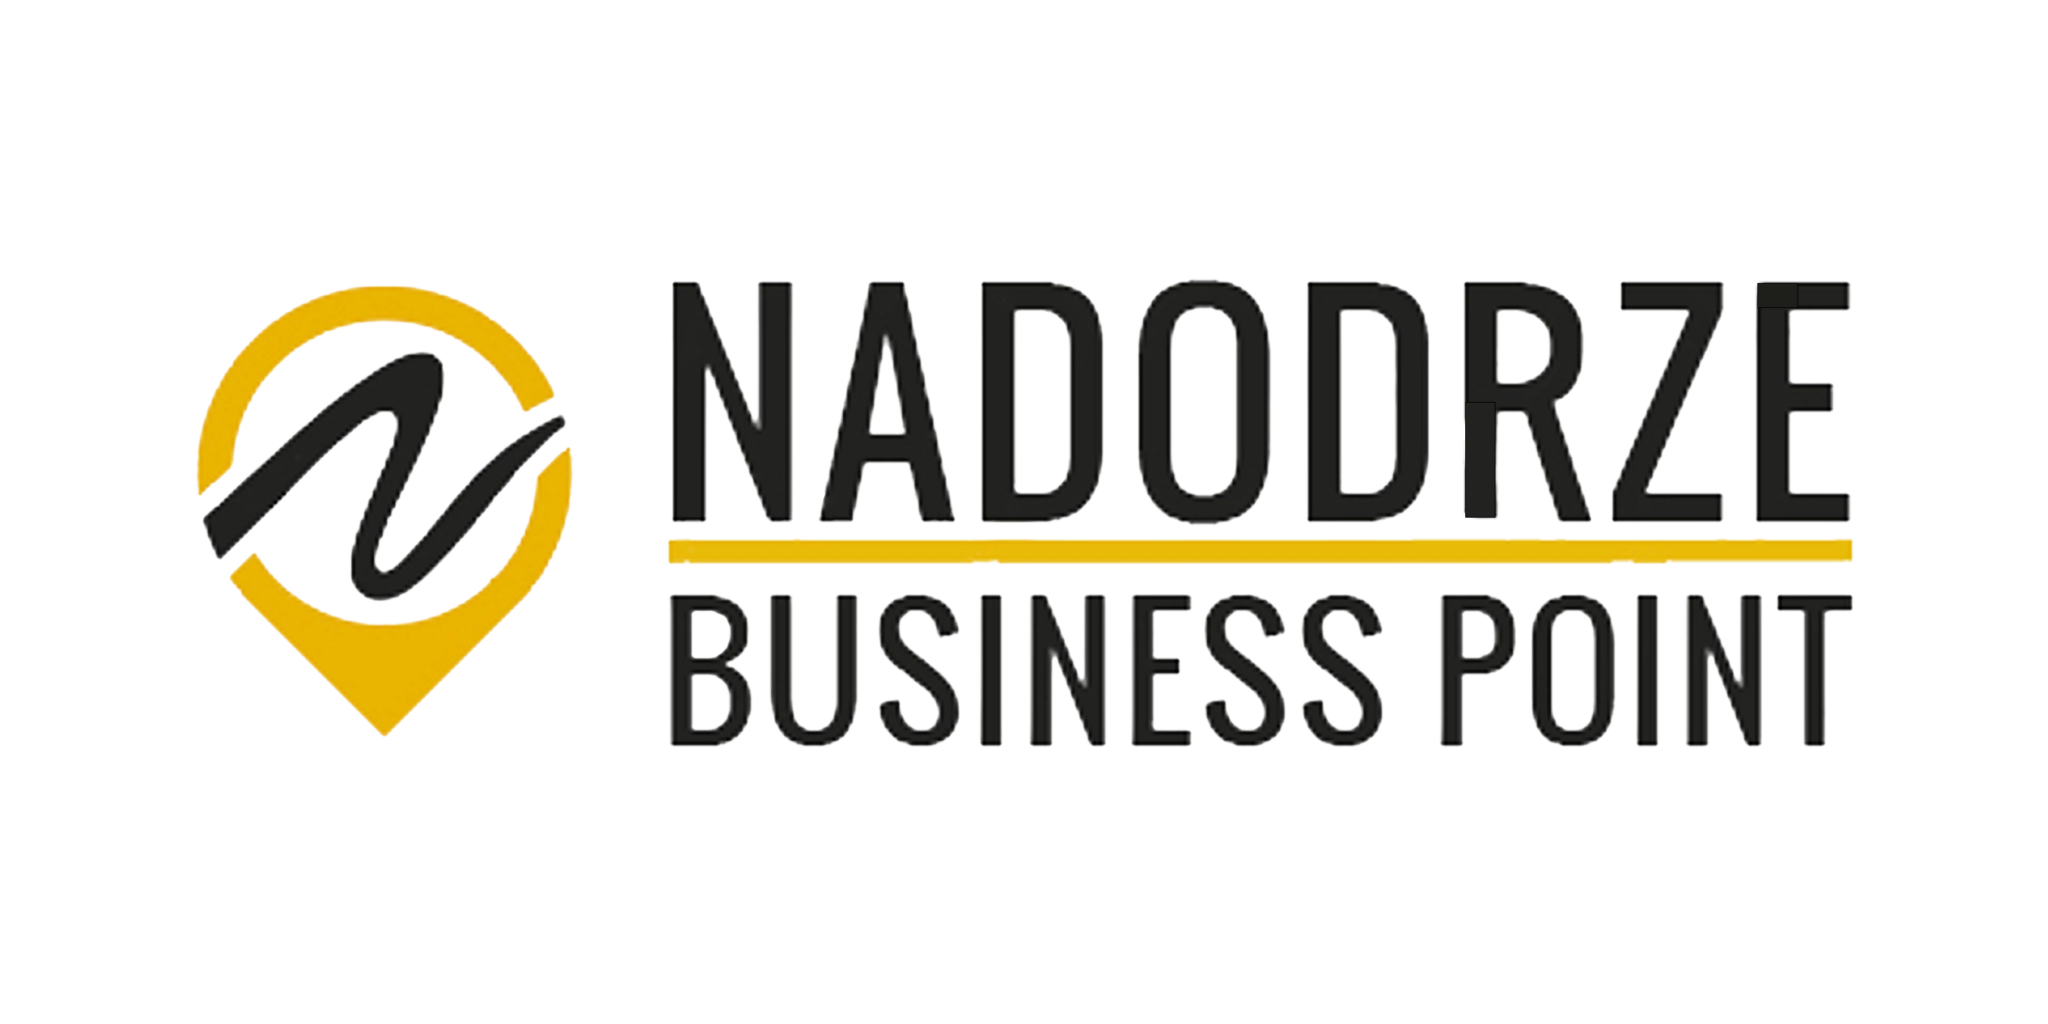 Logo Nadodrze Business Point 